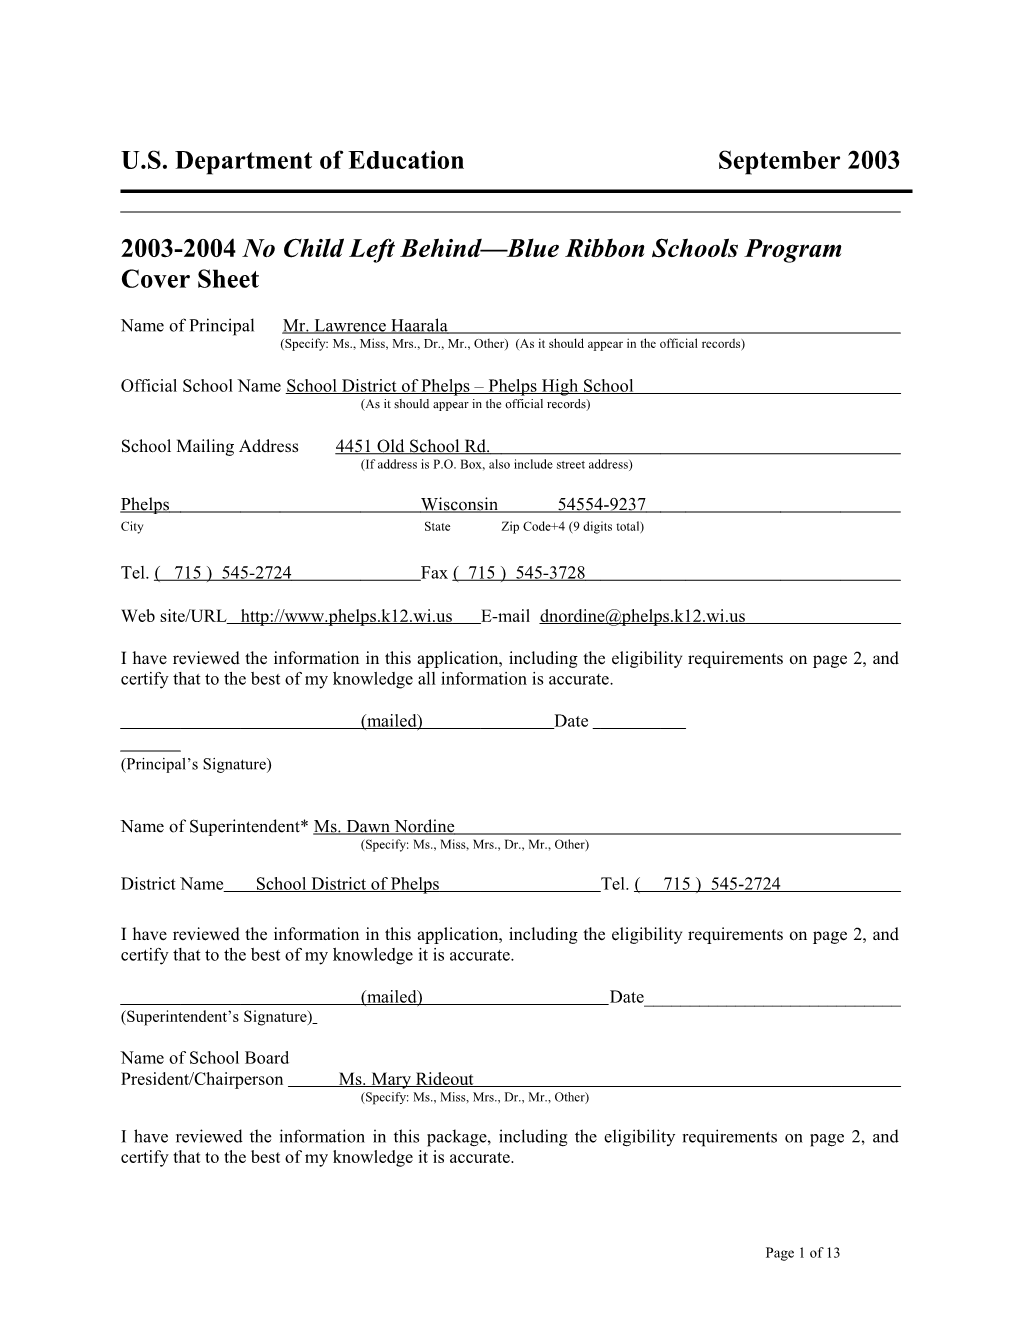 Phelps High School 2004 No Child Left Behind-Blue Ribbon School Application (Msword)